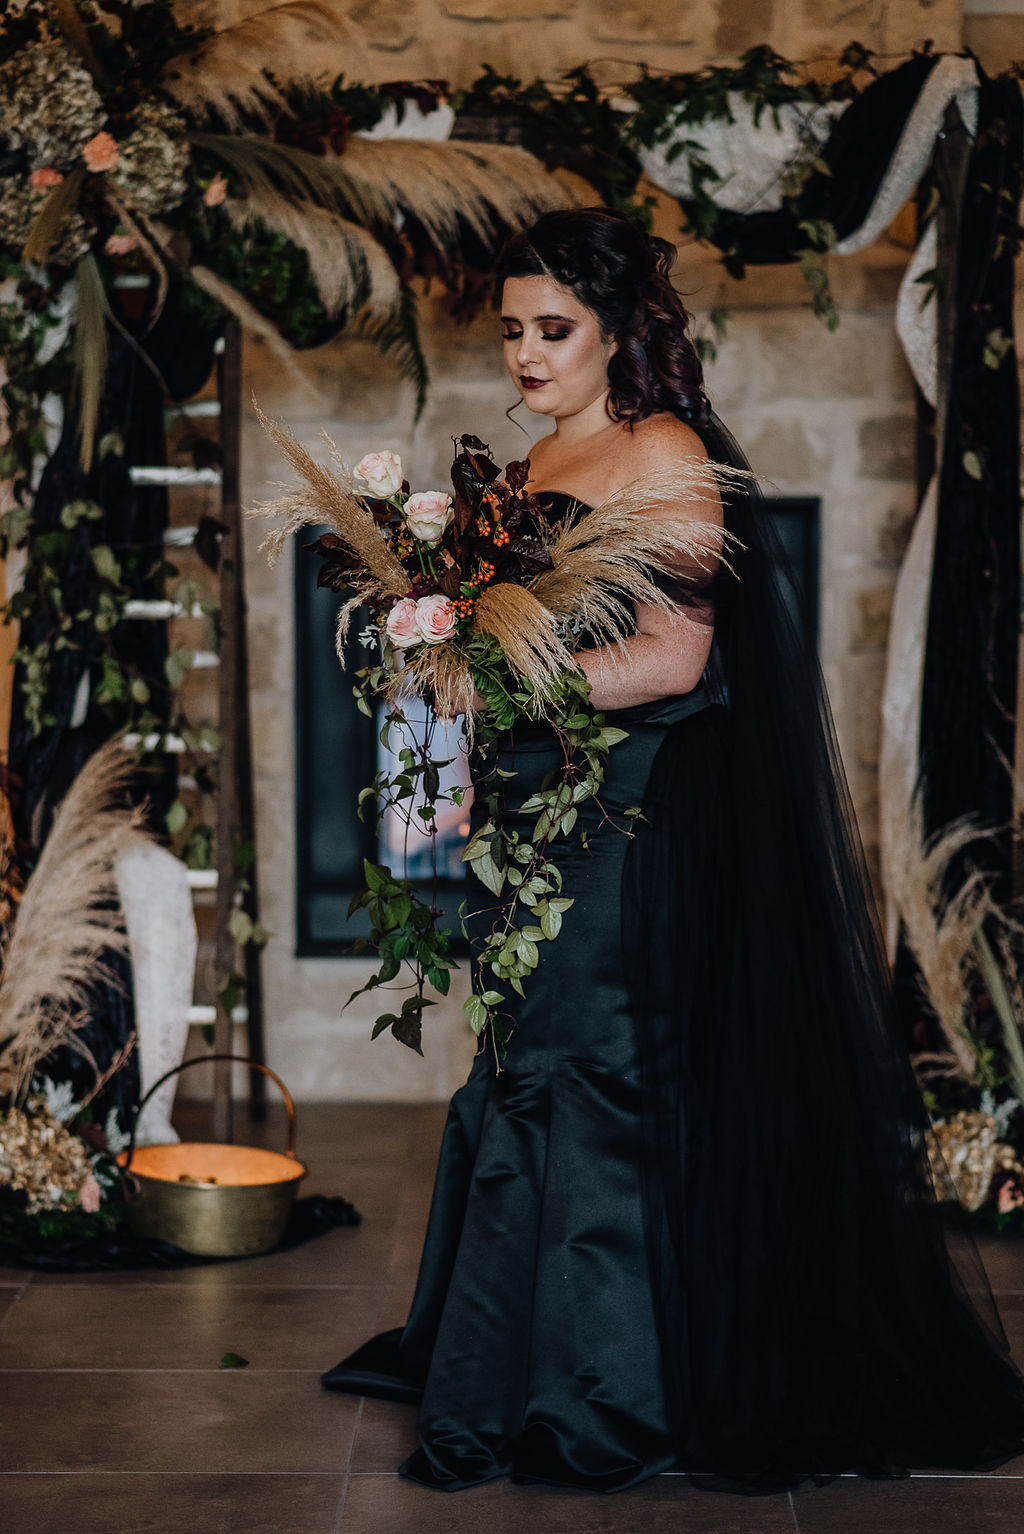 Boho Gothic Shoot With Black Wedding Dress at Roodlea Barn Ayrshire